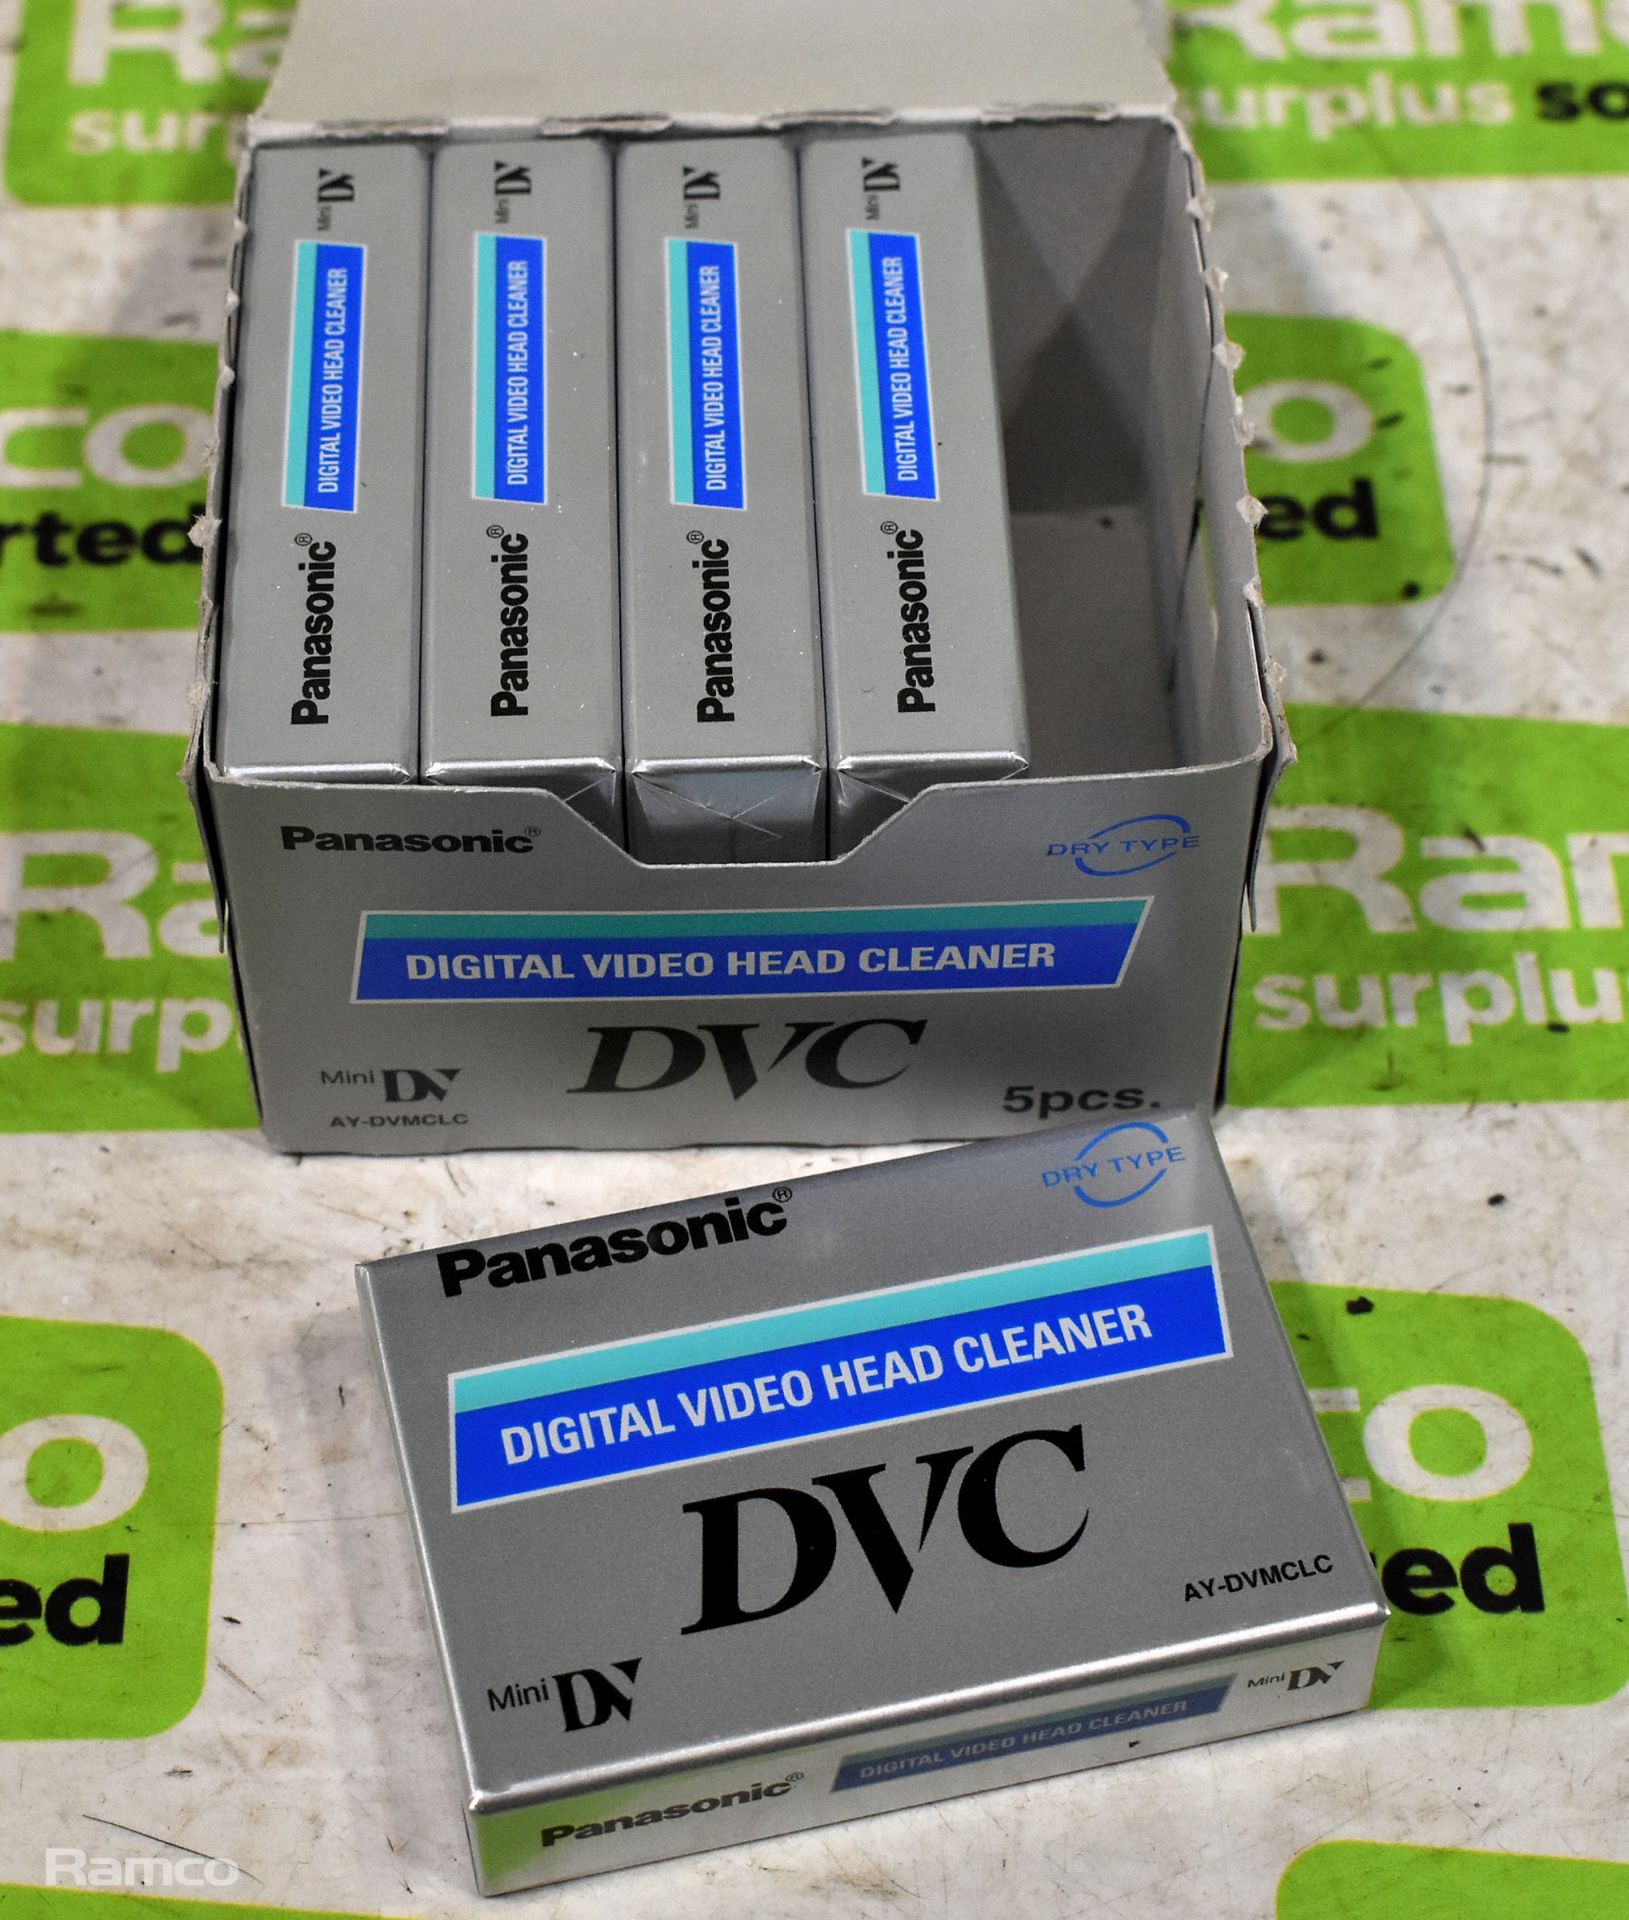 Zebra TLP2844 label printer, 4x boxes of Panasonic DVC digital video head cleaners - 5 units per box - Image 6 of 7